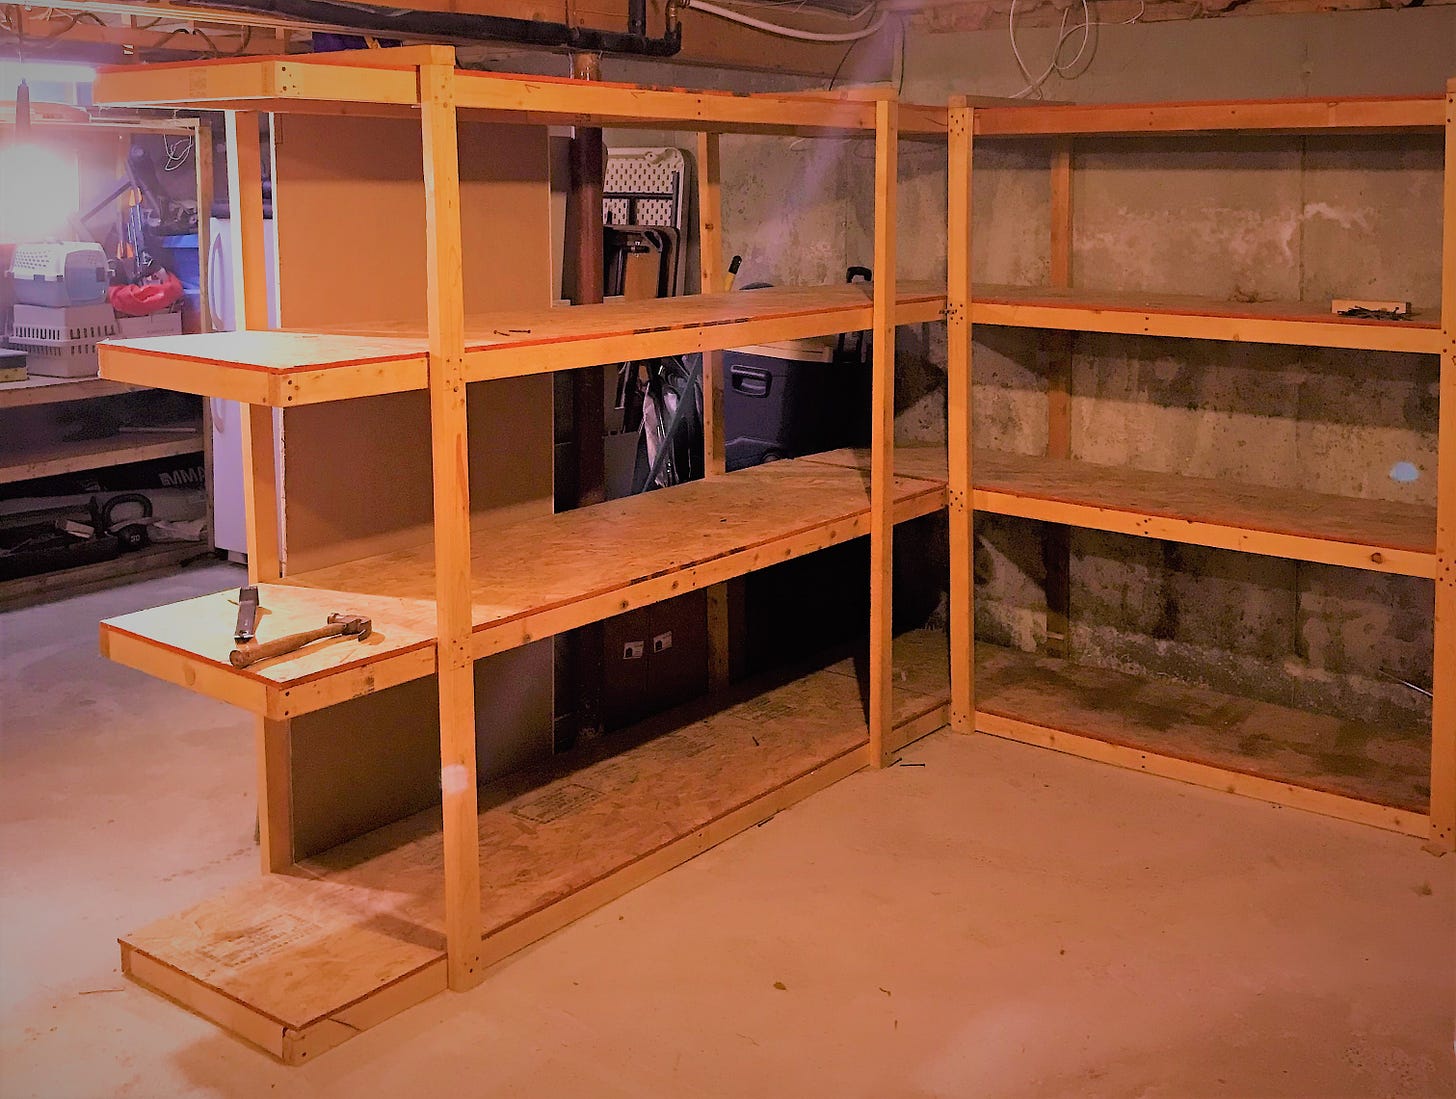 Bare wooden shelves in a basement.